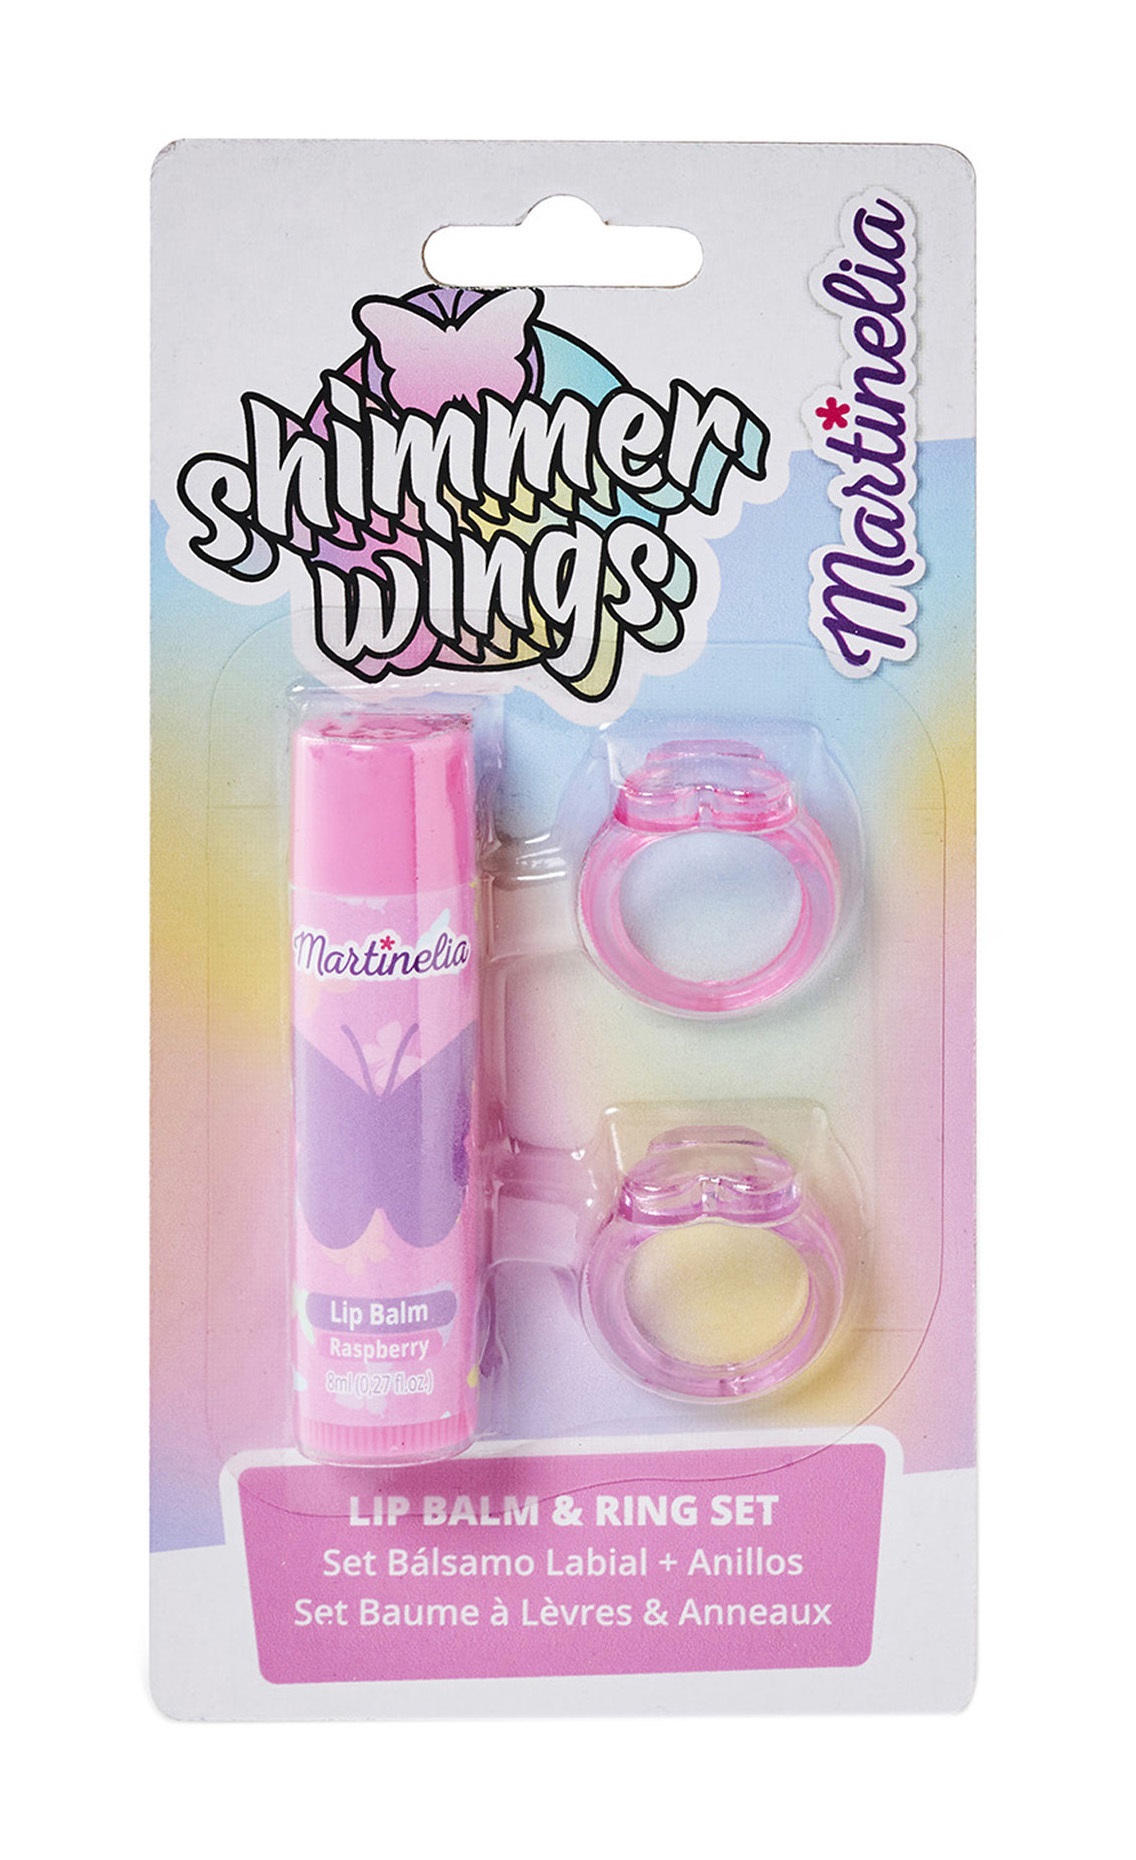 фото Набор детской косметики martinelia shimmer wings lip balm & ring set 3 предмета 11949